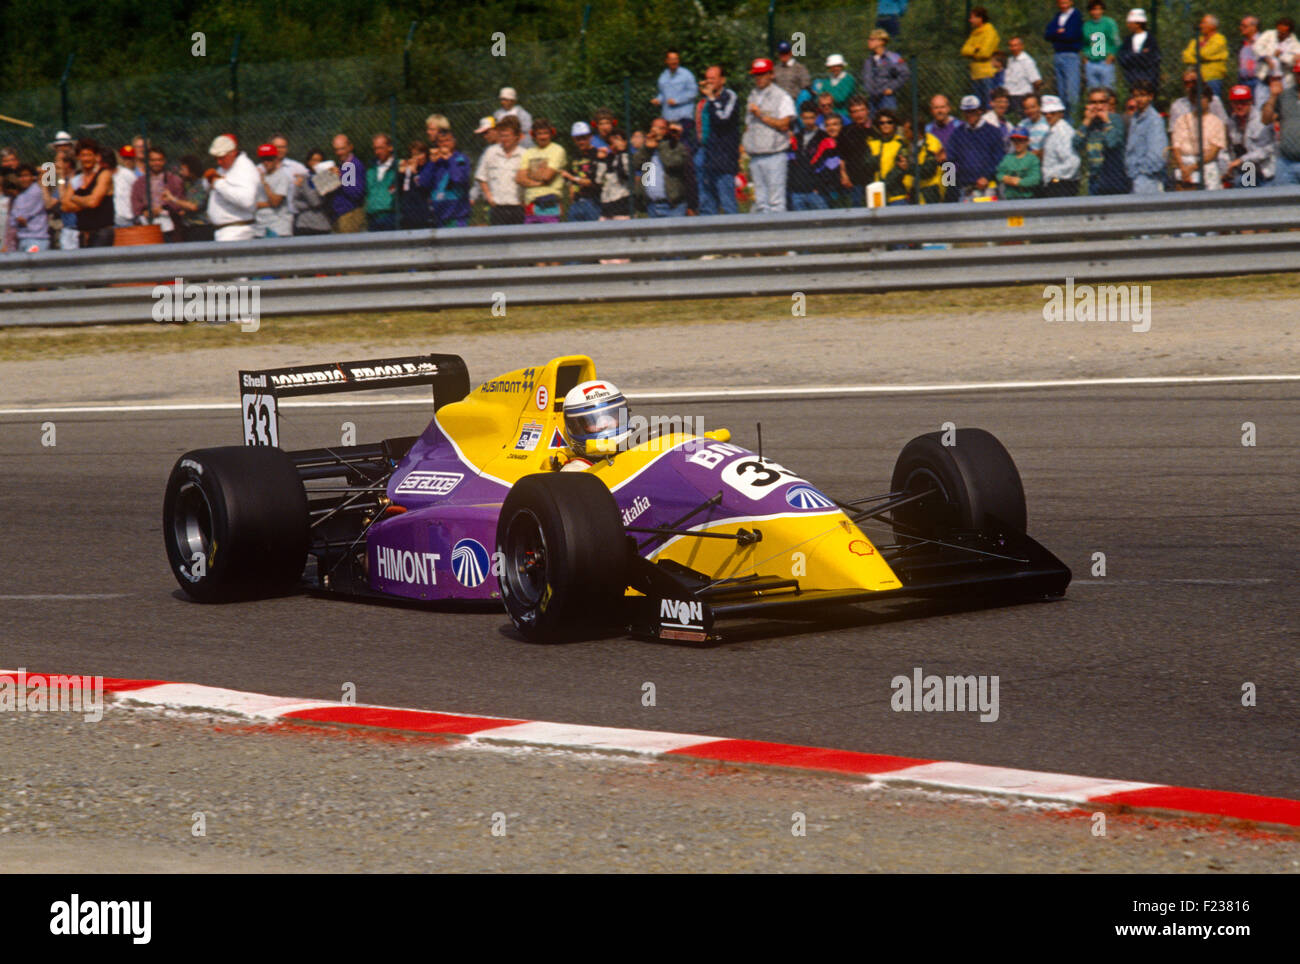 Alex Zanardi in his Formula 1 Racing car. Stock Photo